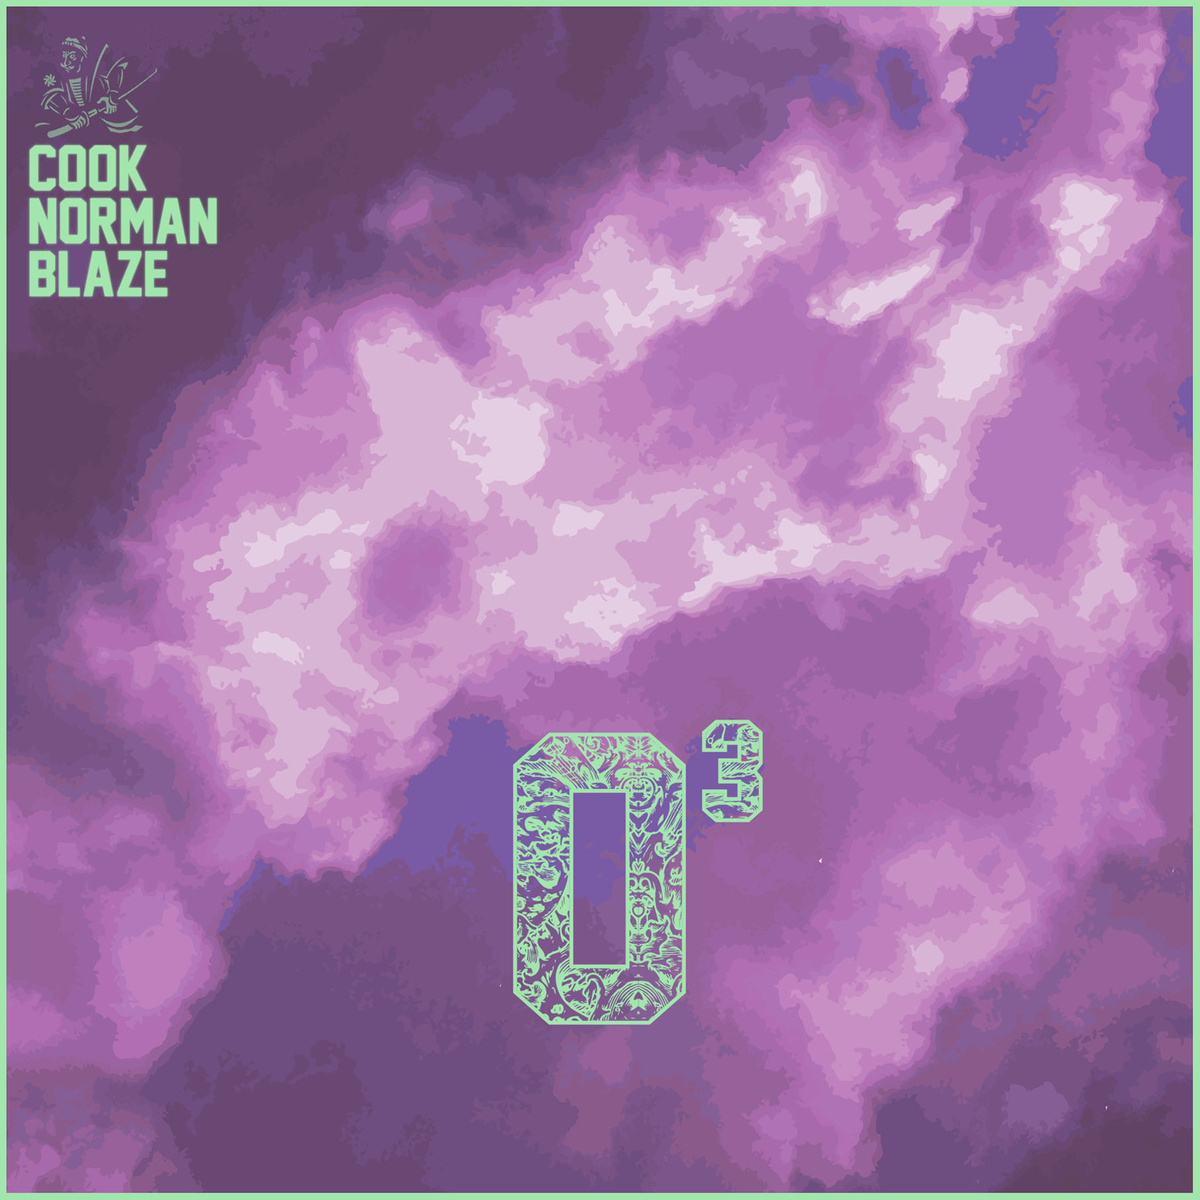 Cook Norman Blaze "o3" Release | @CookNormanBlaze